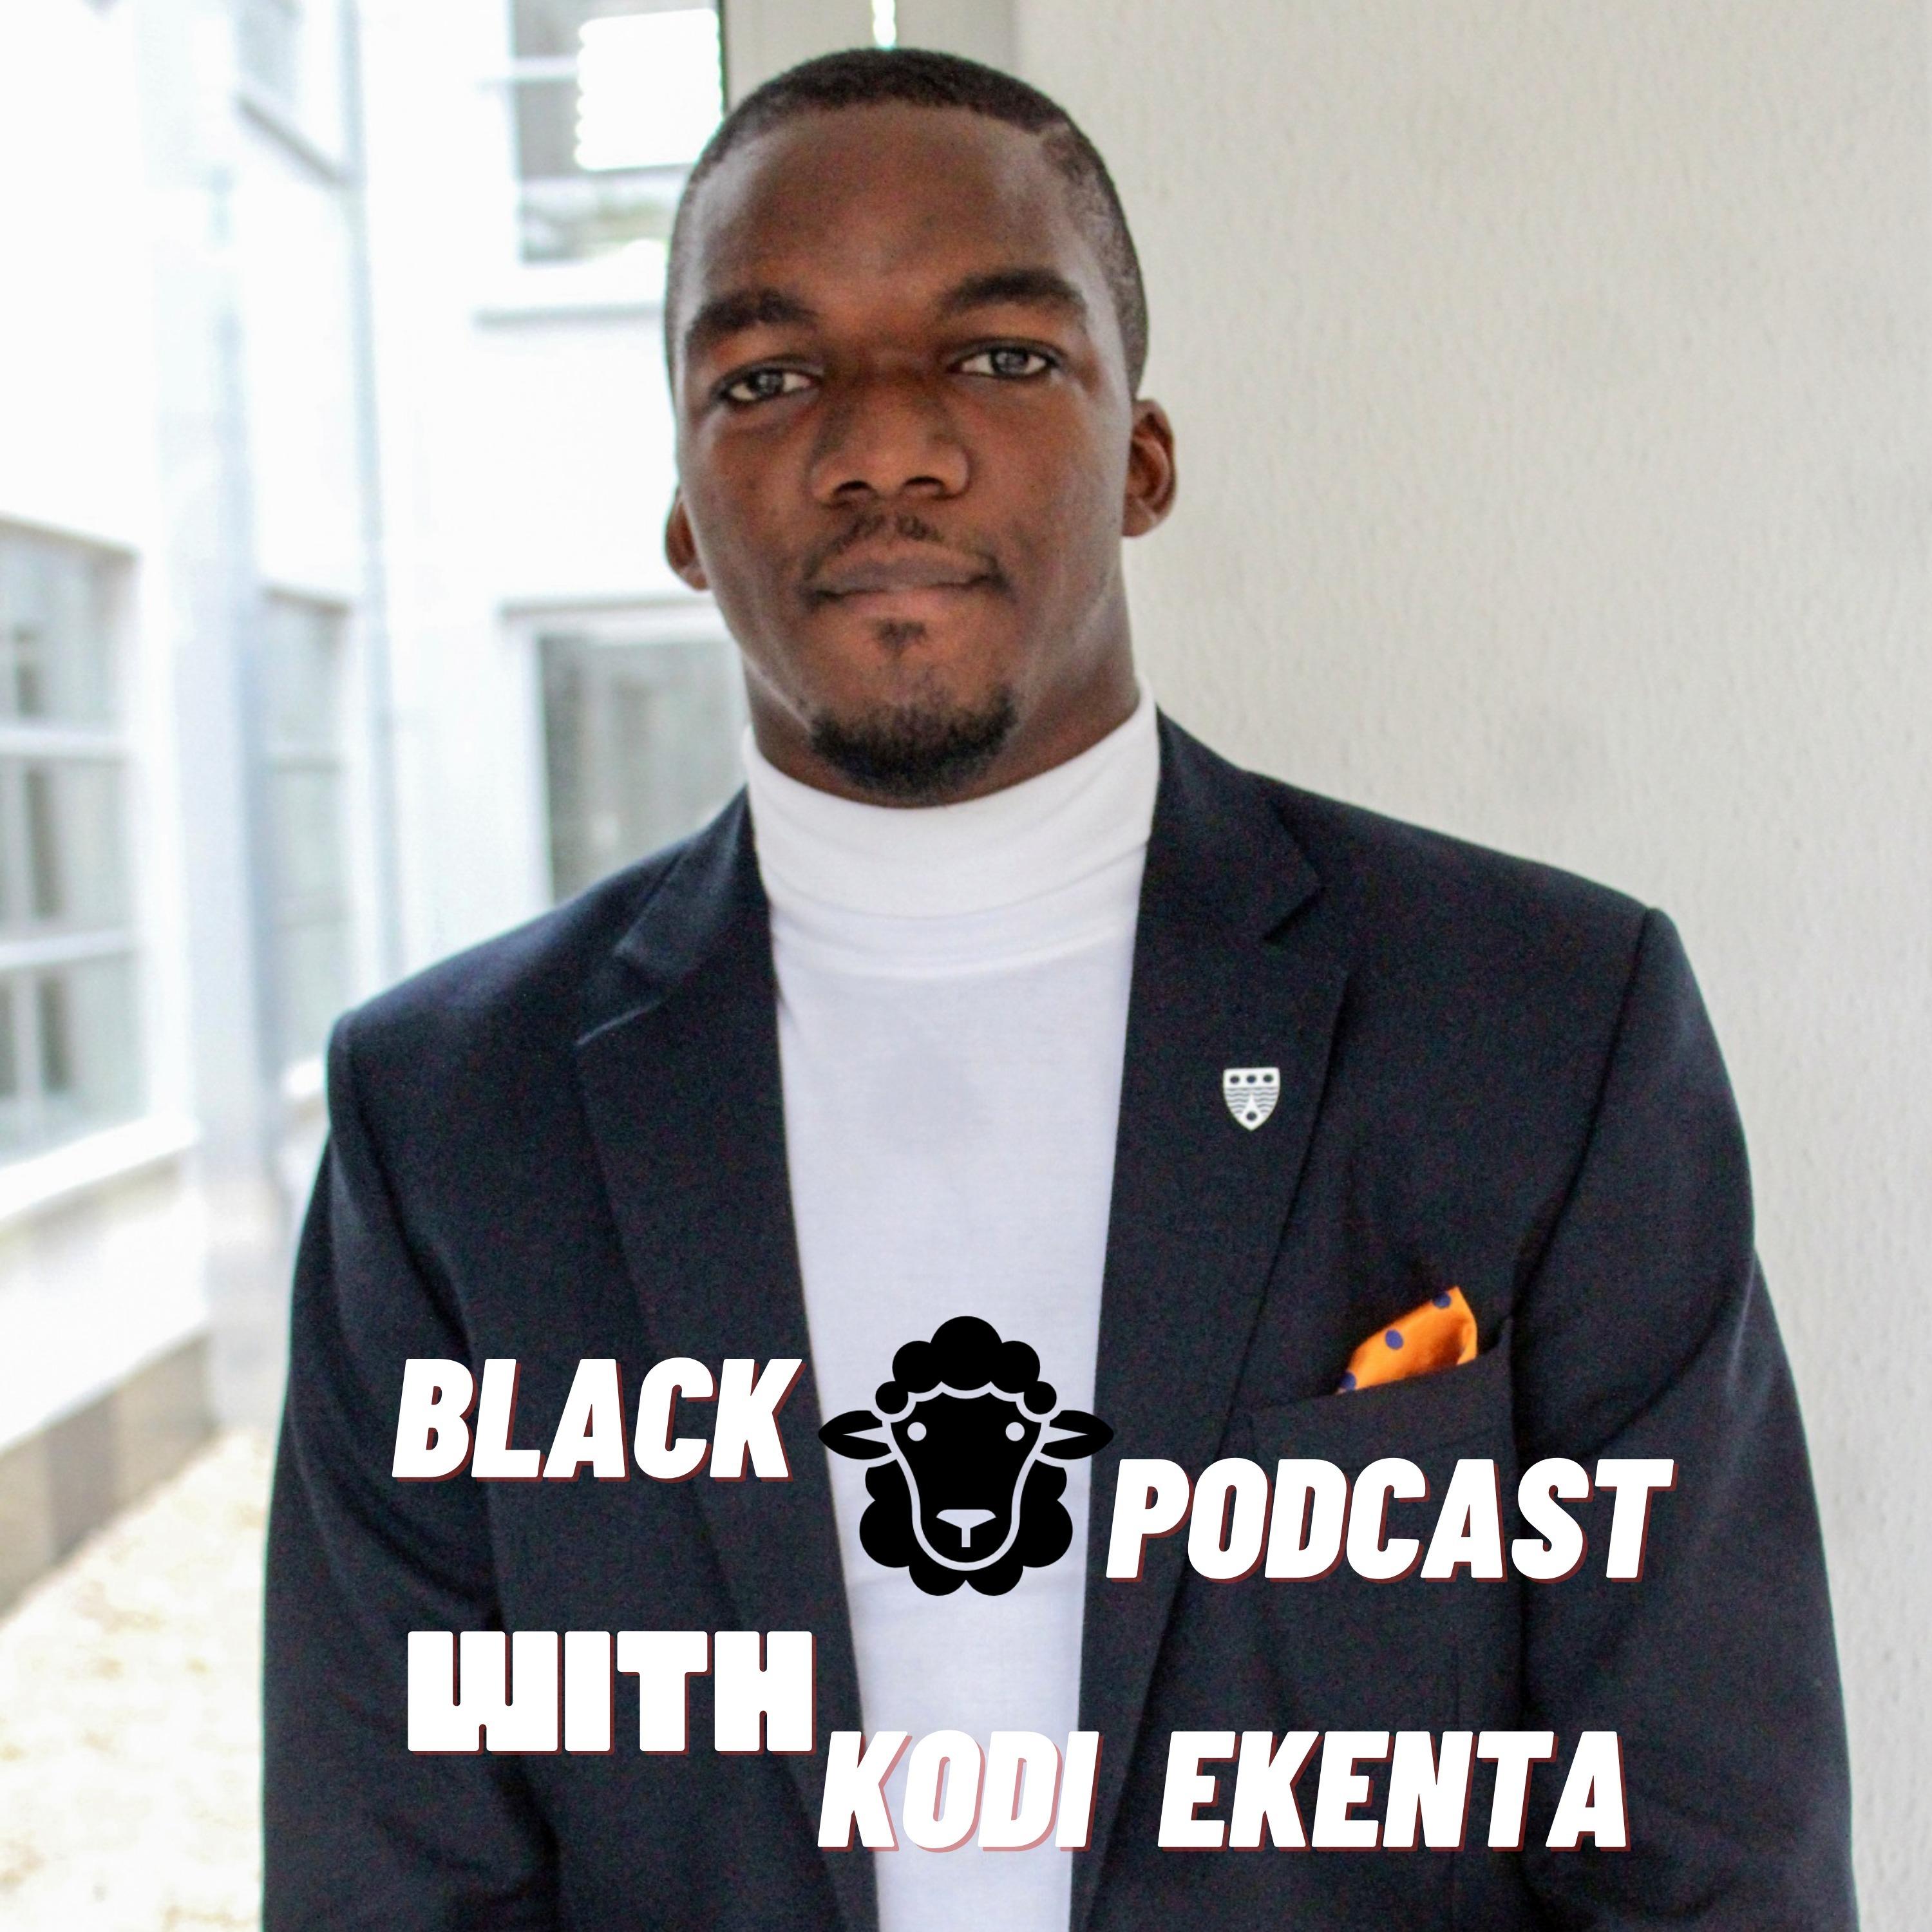 Black Sheep Podcast with Kodi Ekenta